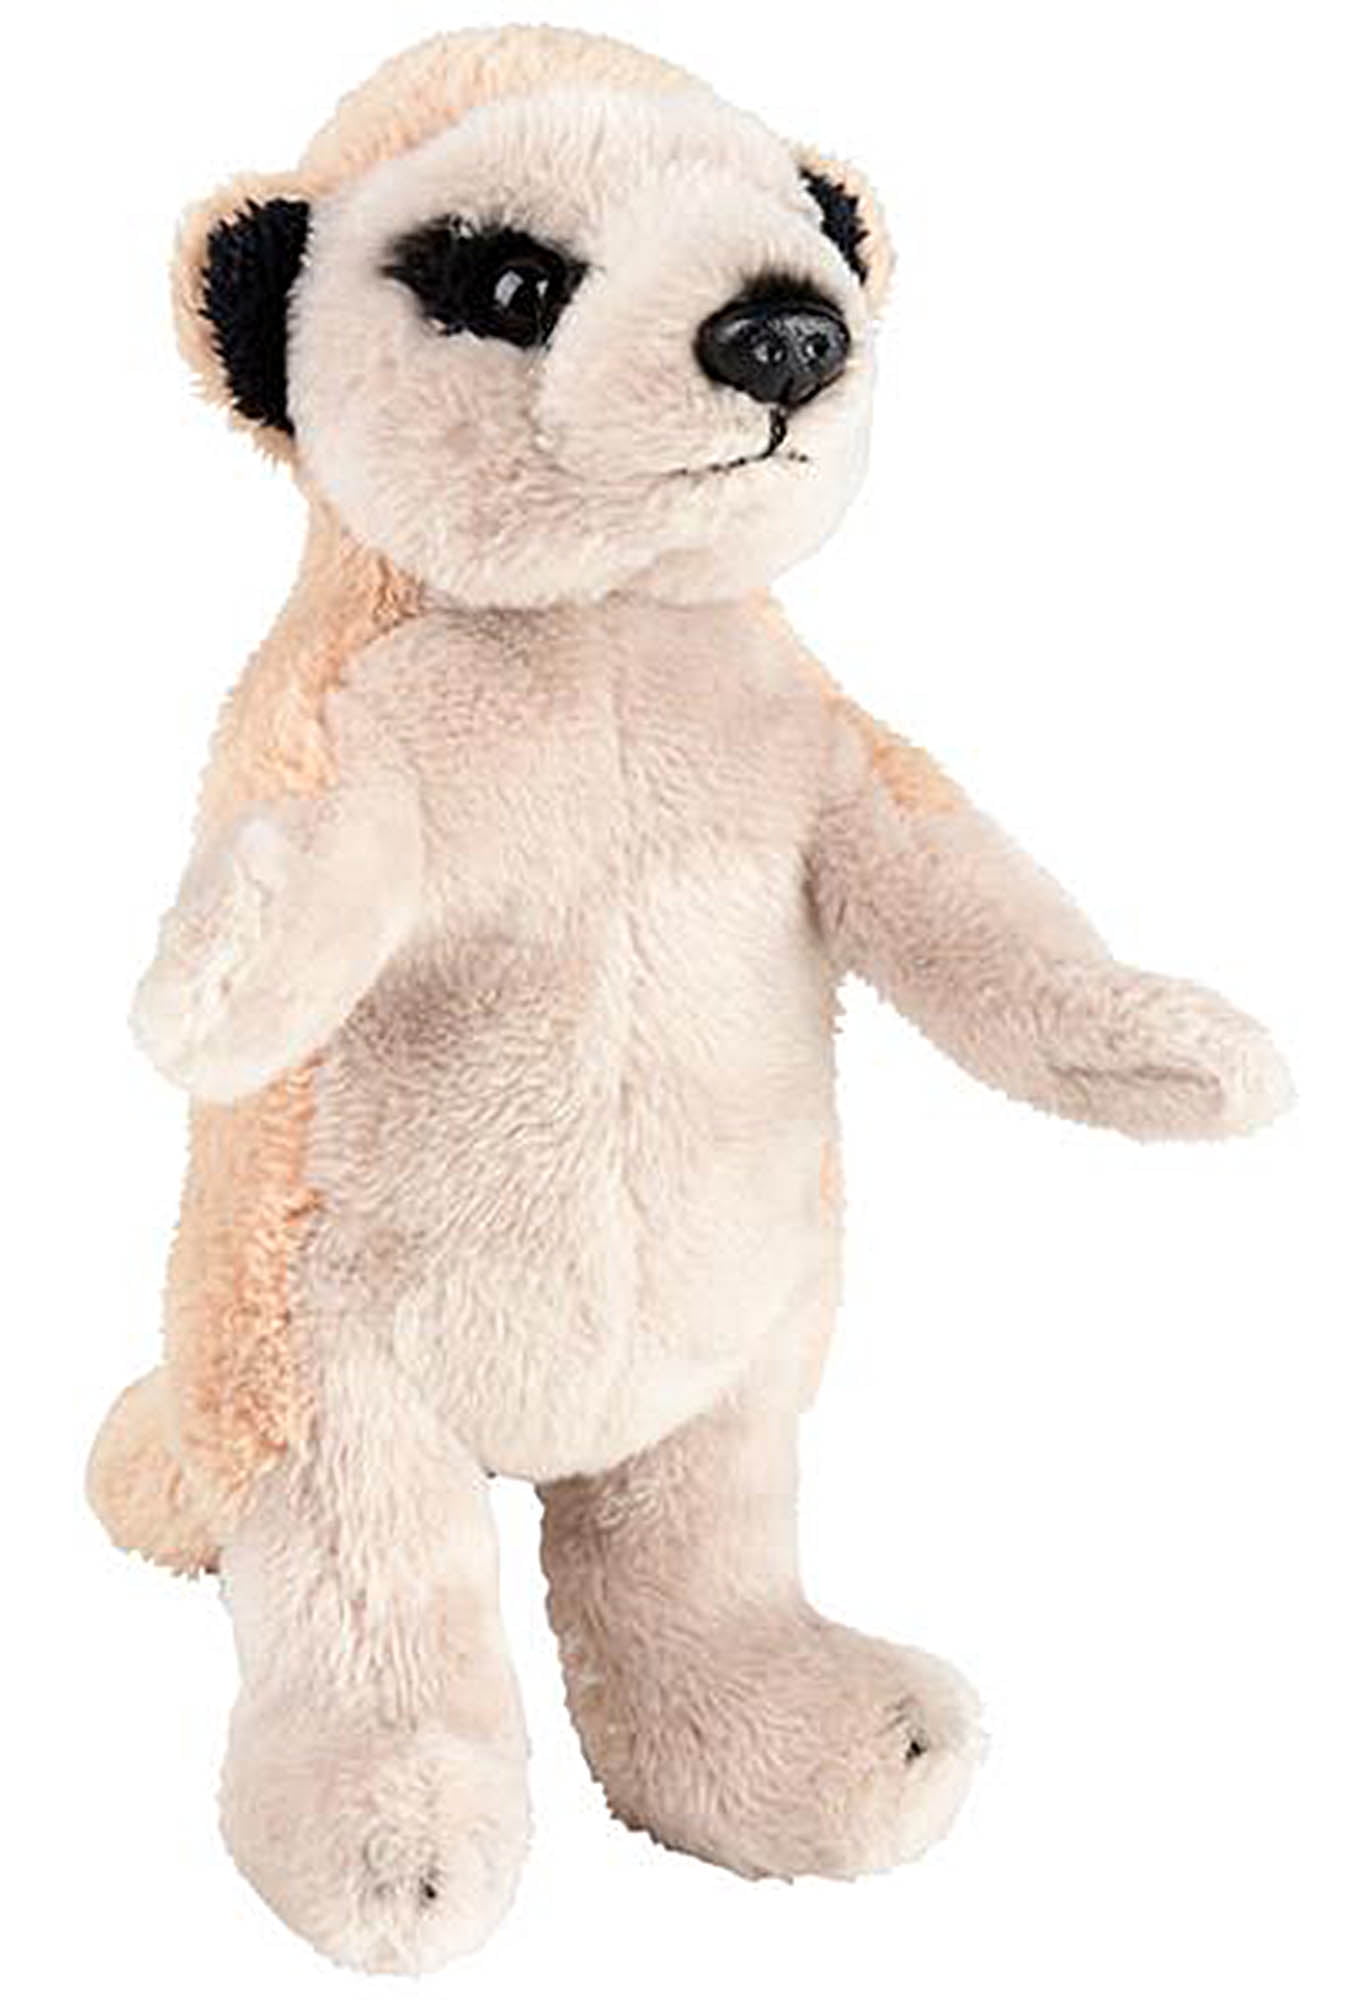 5" Meerkat Small World Plush Stuffed Animal Soft Baby 